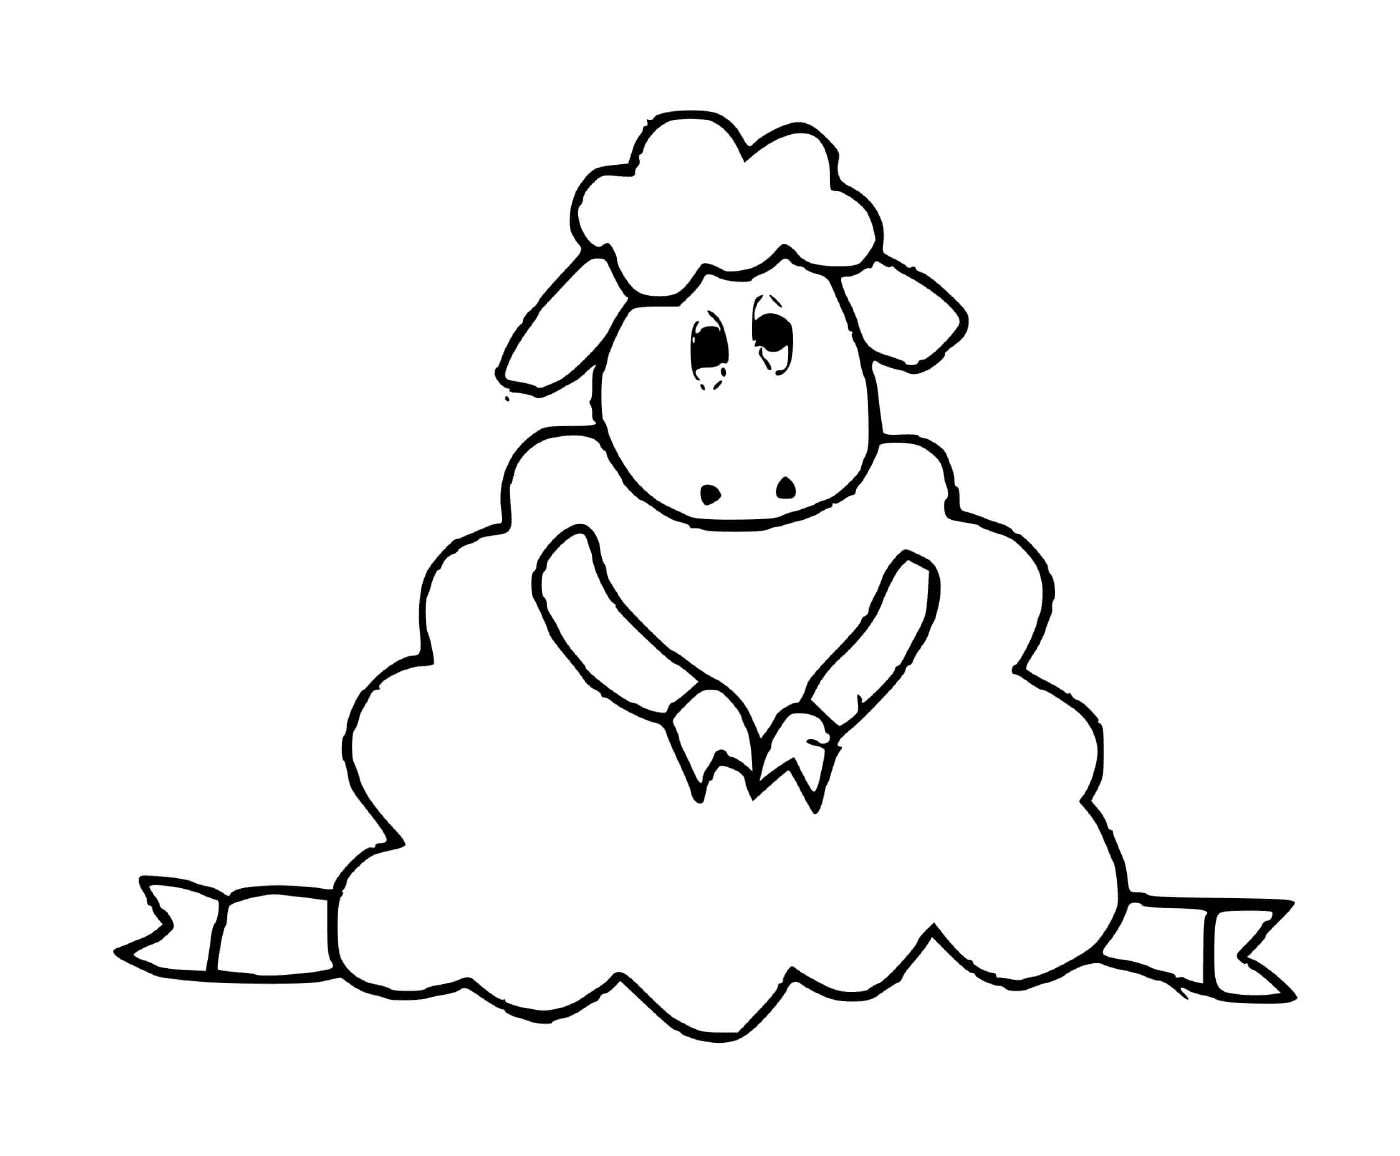  sheep sitting on cloud 